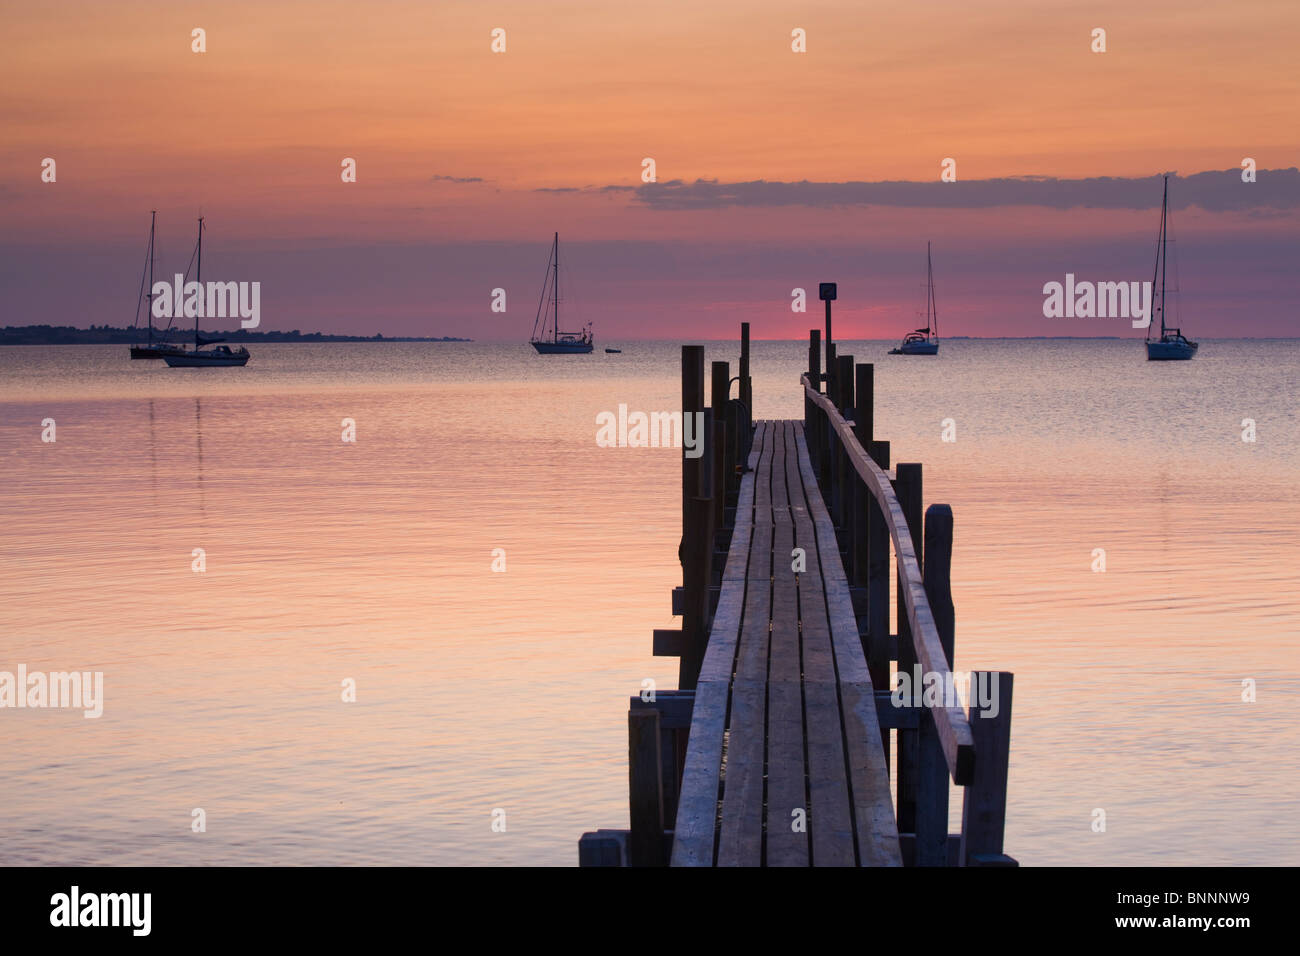 Aeroskobing Dänemark Insel Insel Aero Strand Küste Meer Steg Boote Segeln Schiffe Sonnenuntergang Abendstimmung Stockfoto